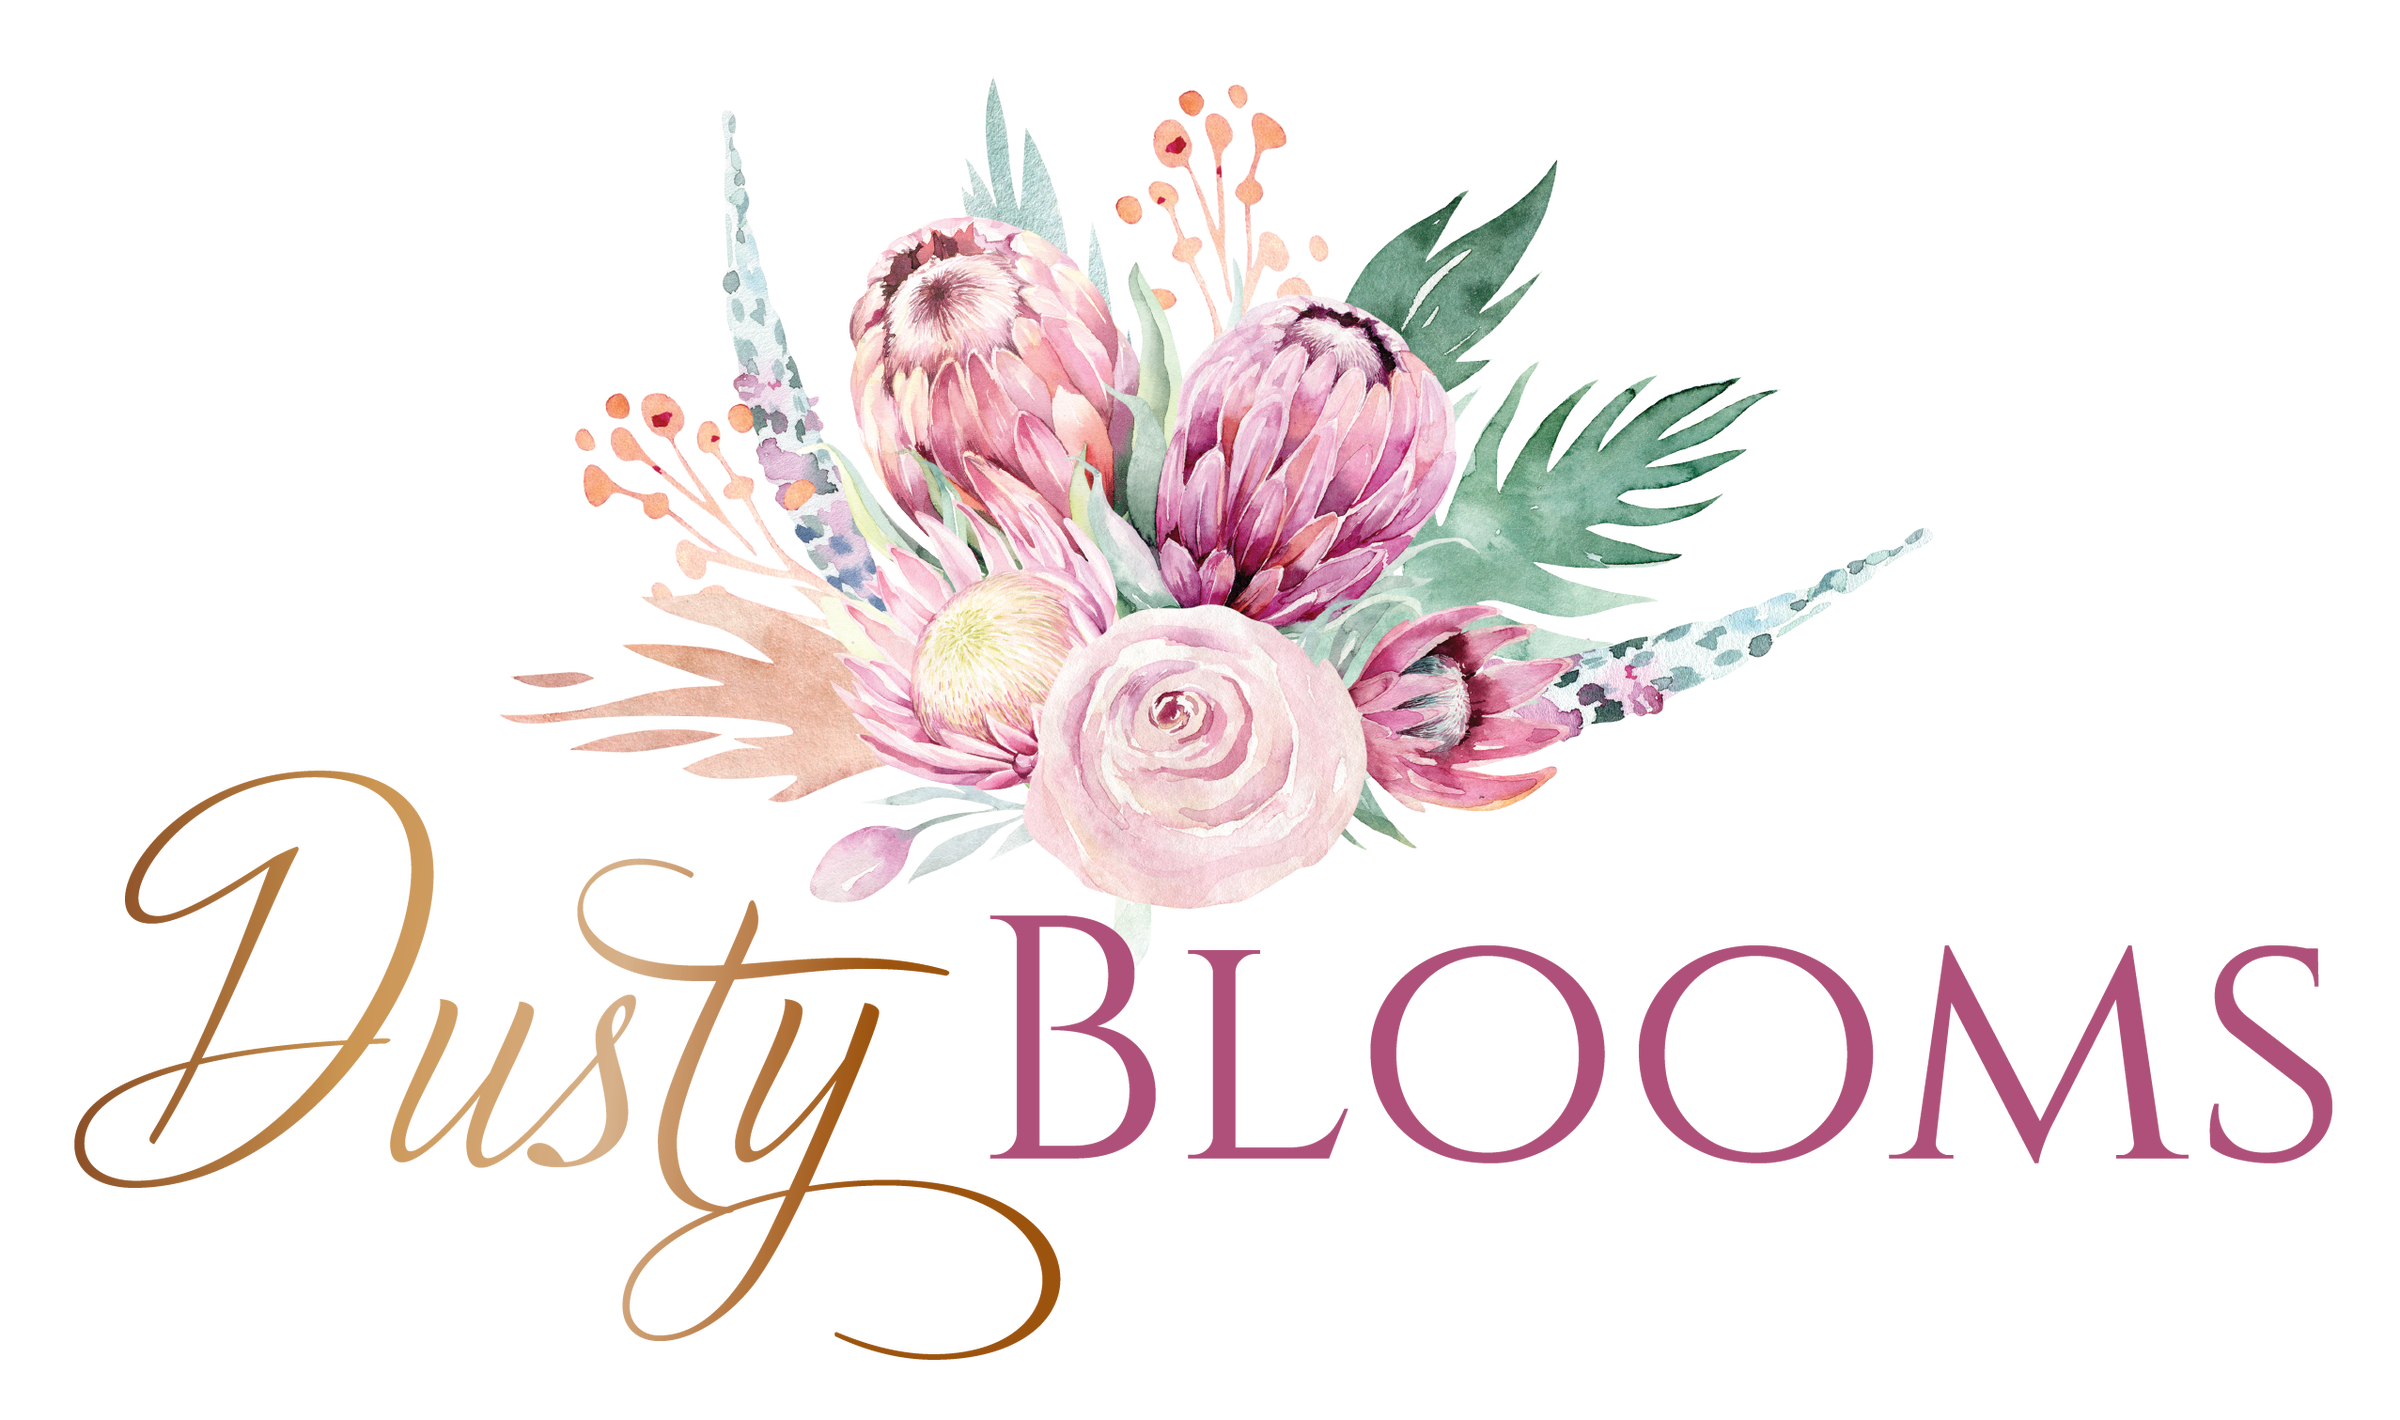 Dusty Blooms Floral Design Elements (PNG)